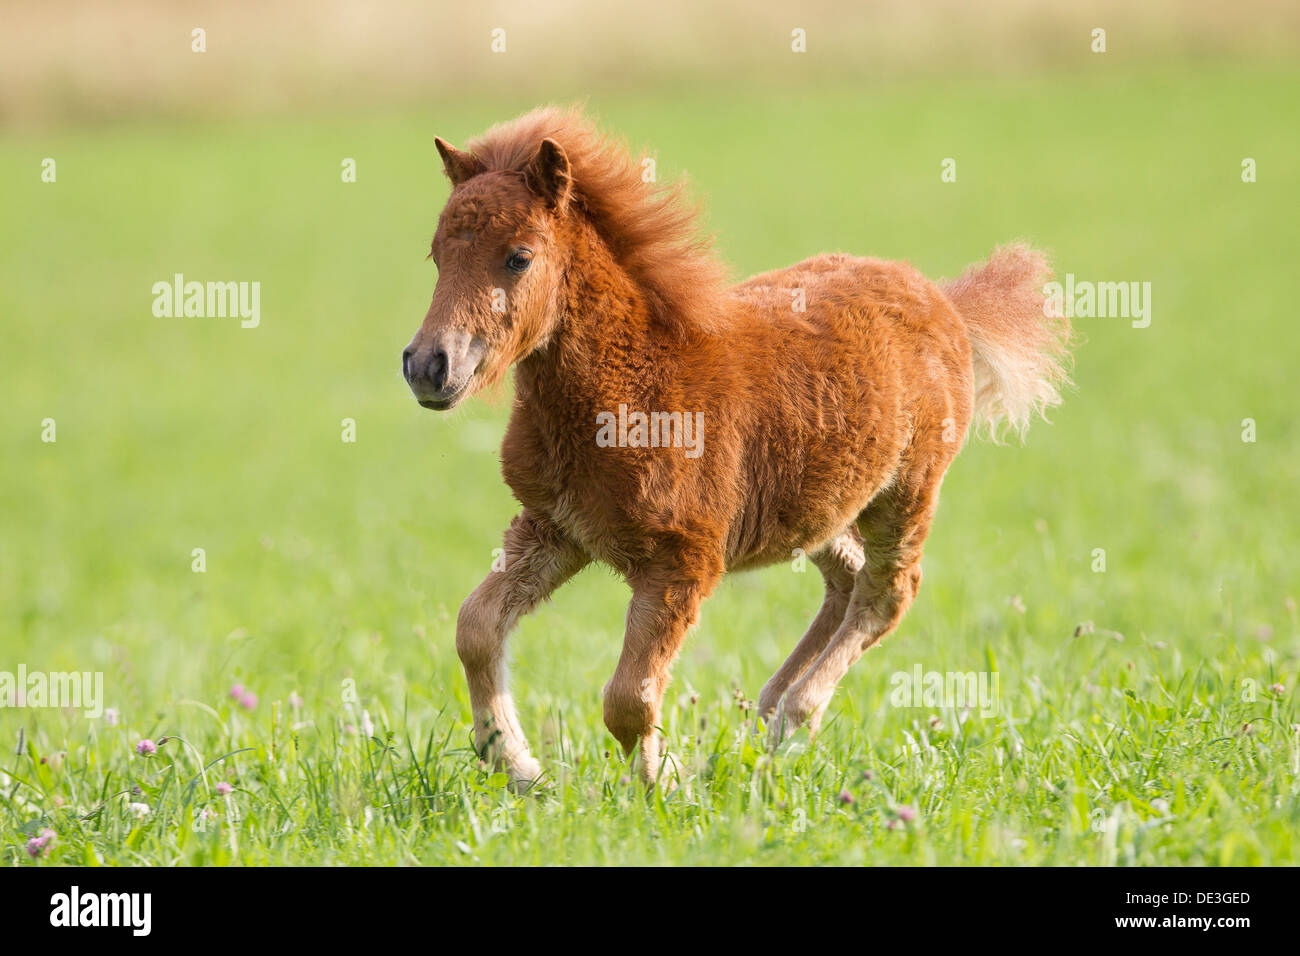 Miniature Shetland Pony Chestnut foal gallopinga meadow Stock Photo